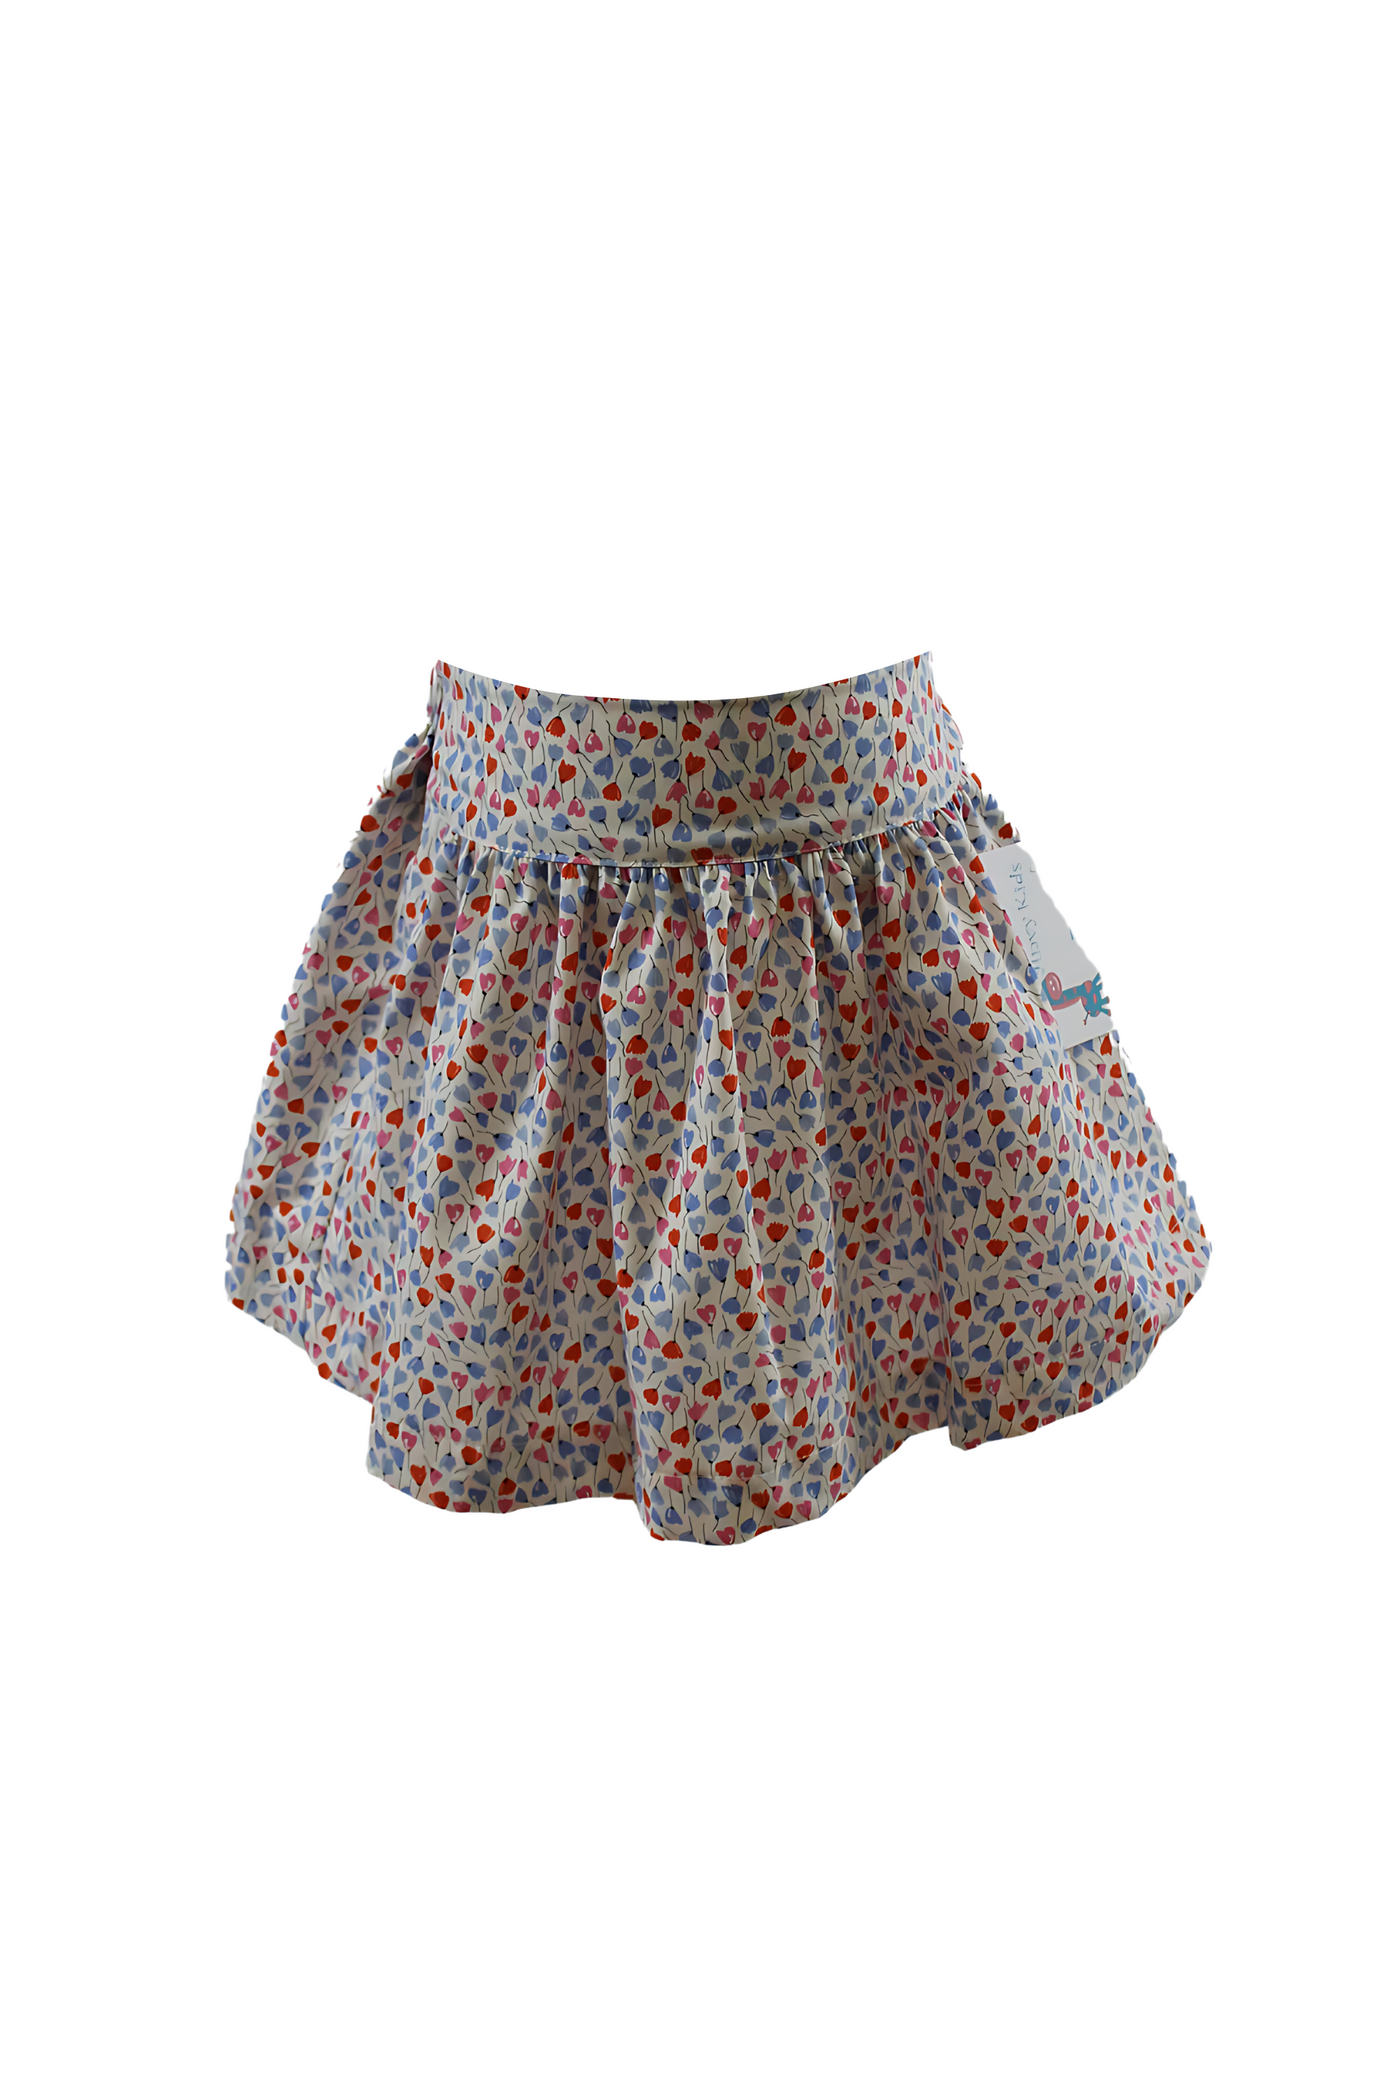 Hazel Rain Lilies Skirt